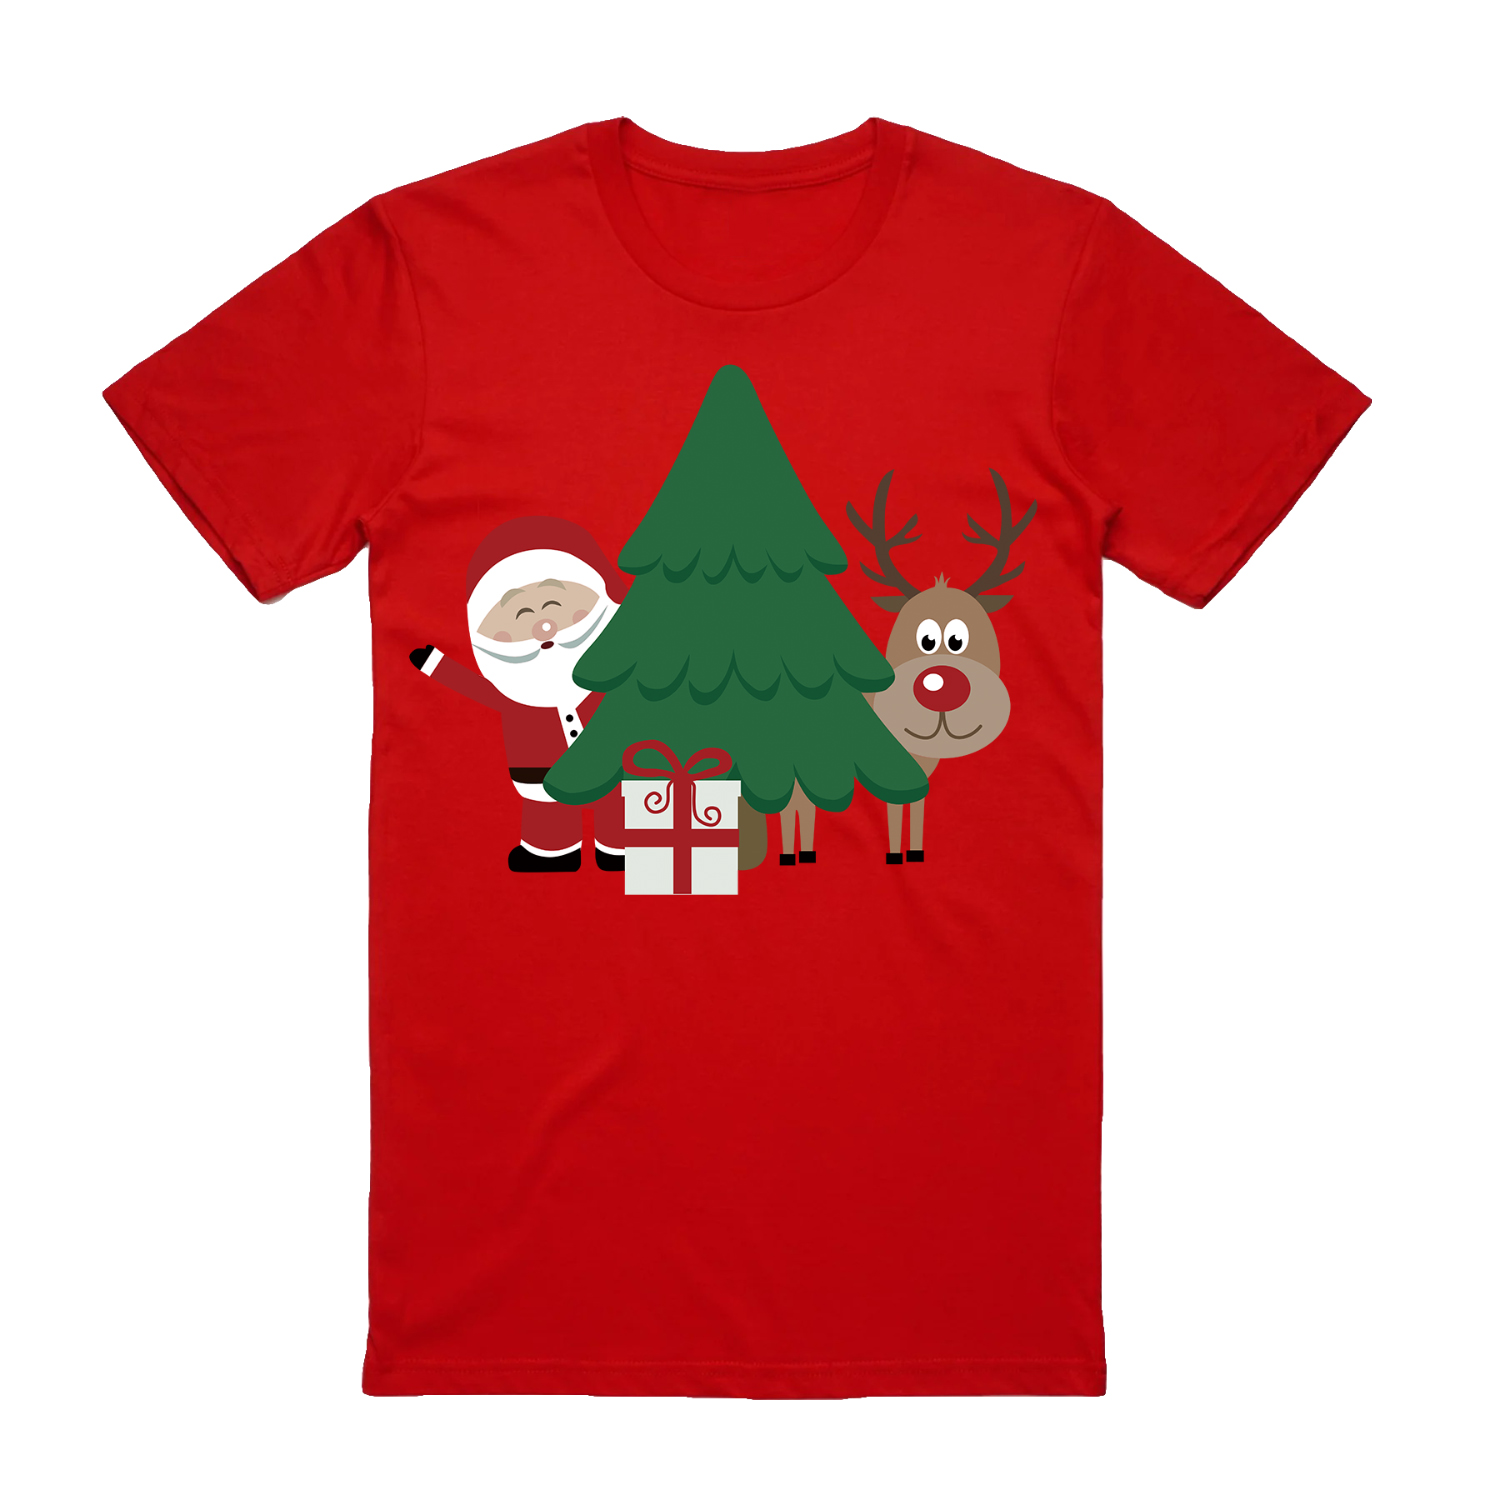 100% Cotton Christmas T-shirt Adult Unisex Tee Tops - Santa with Tree